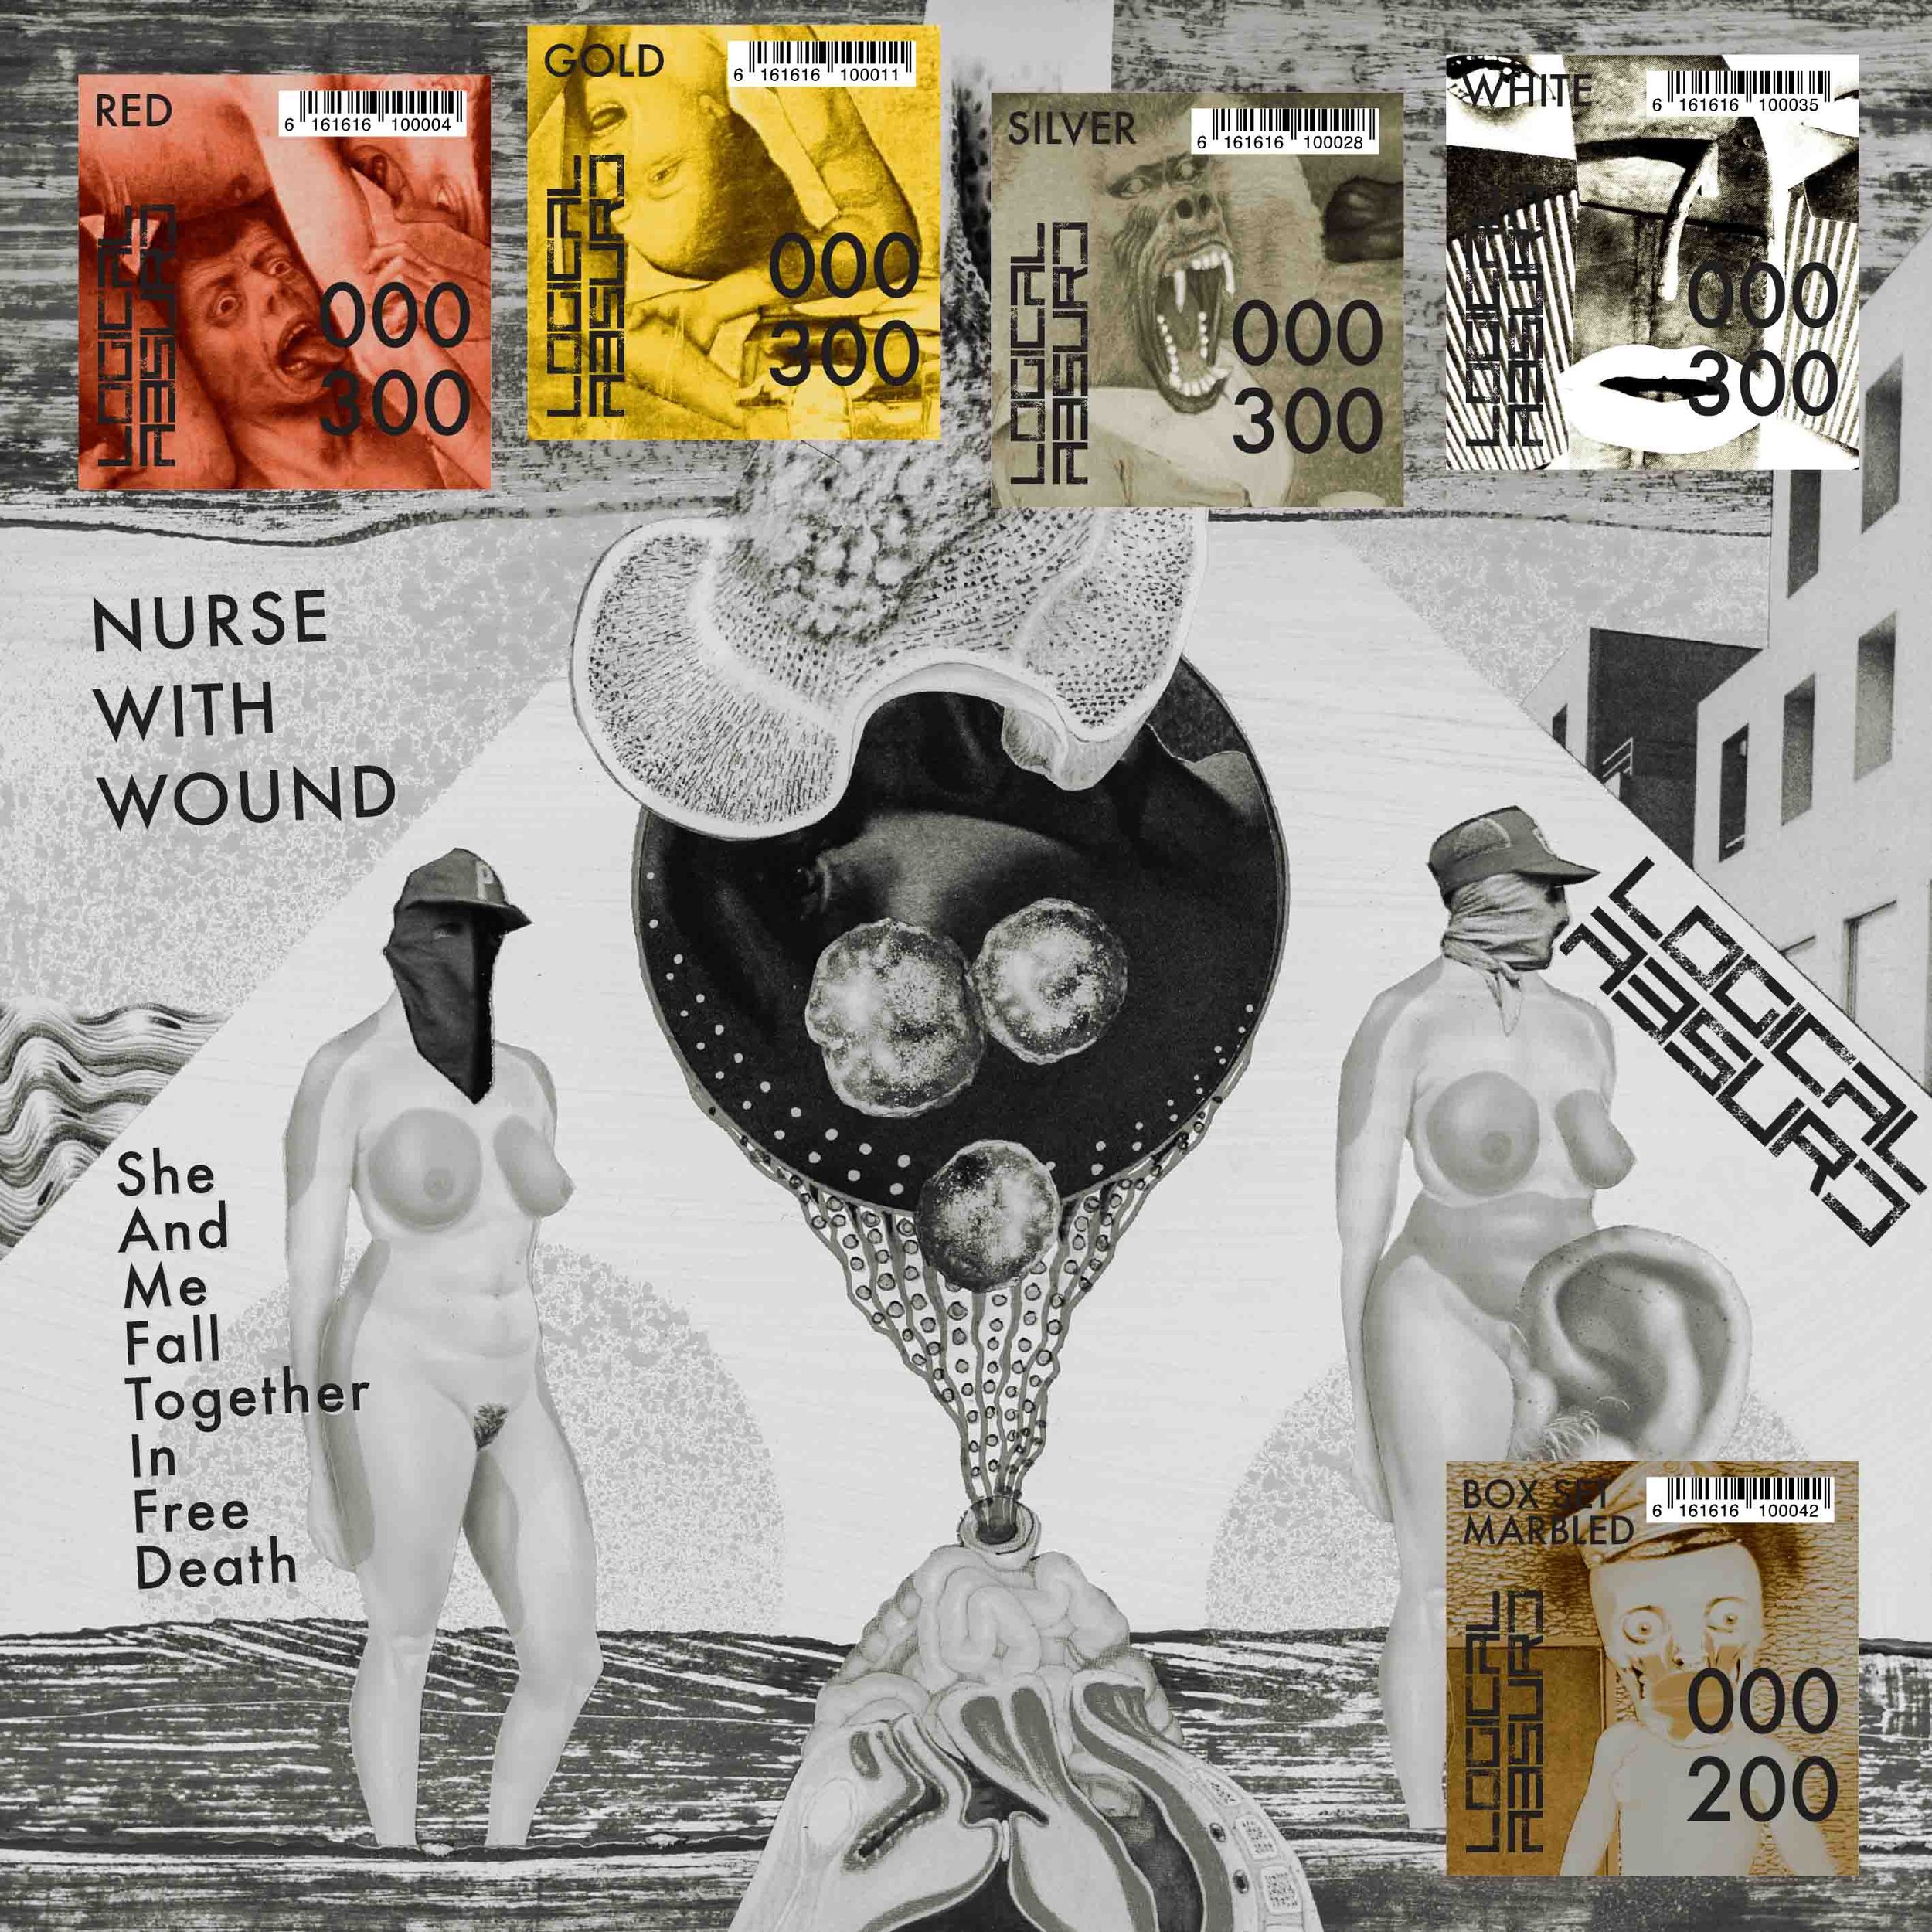 The Little Dipper Minus Two Plus (Echo Poeme Sequences) LP VERSION, Nurse  With Wound